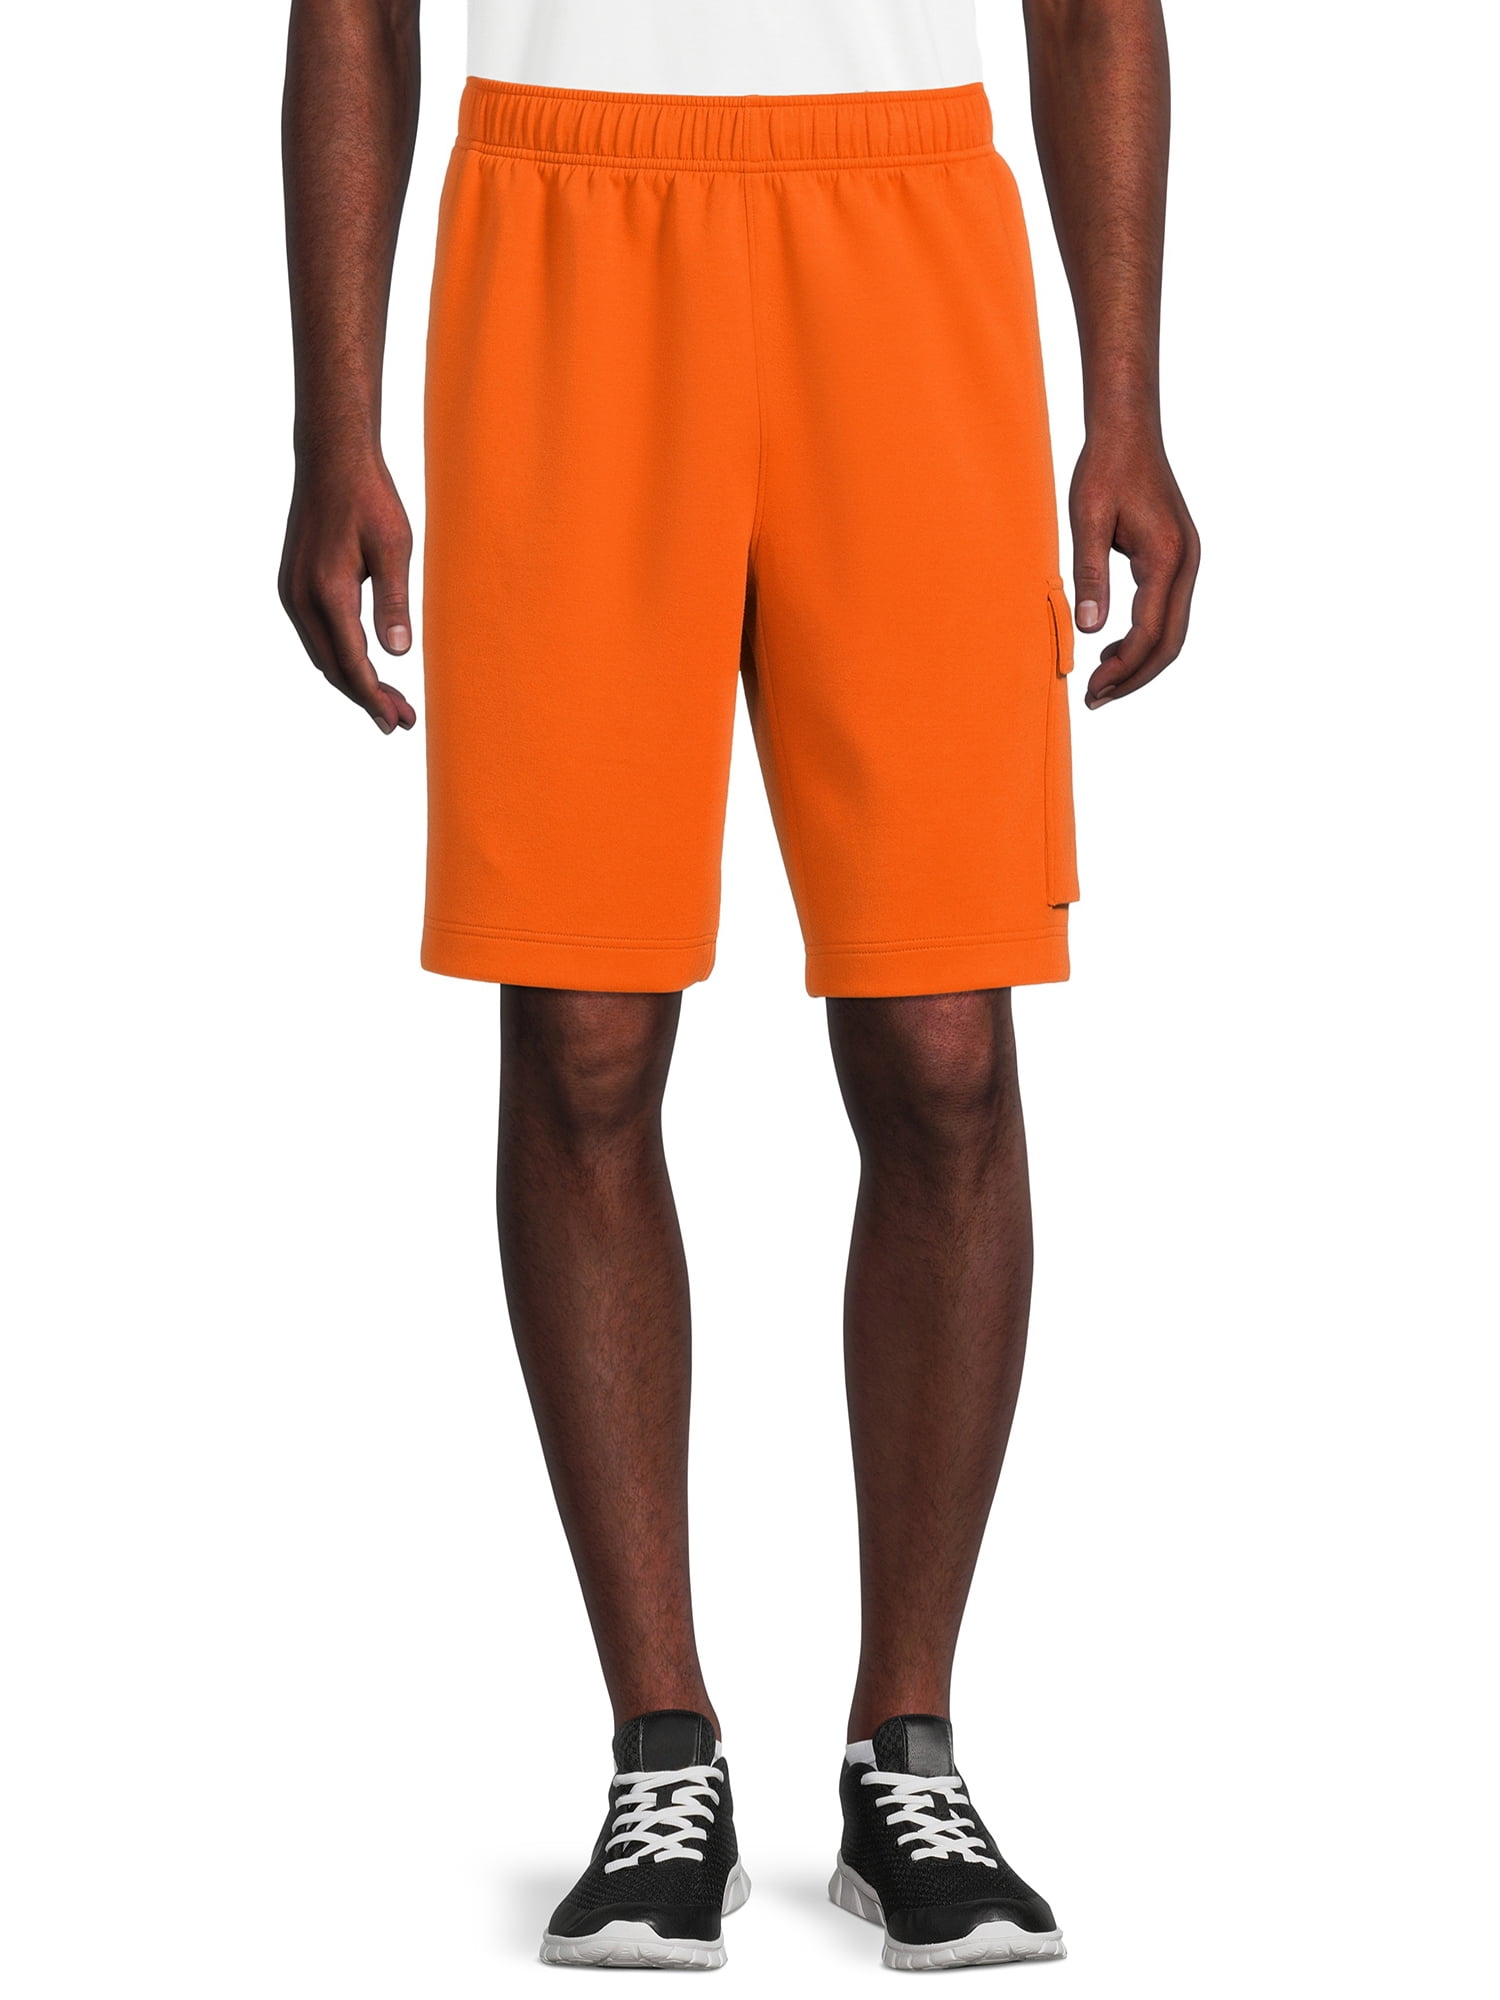 Nike Orange Pull-on Shorts for Women